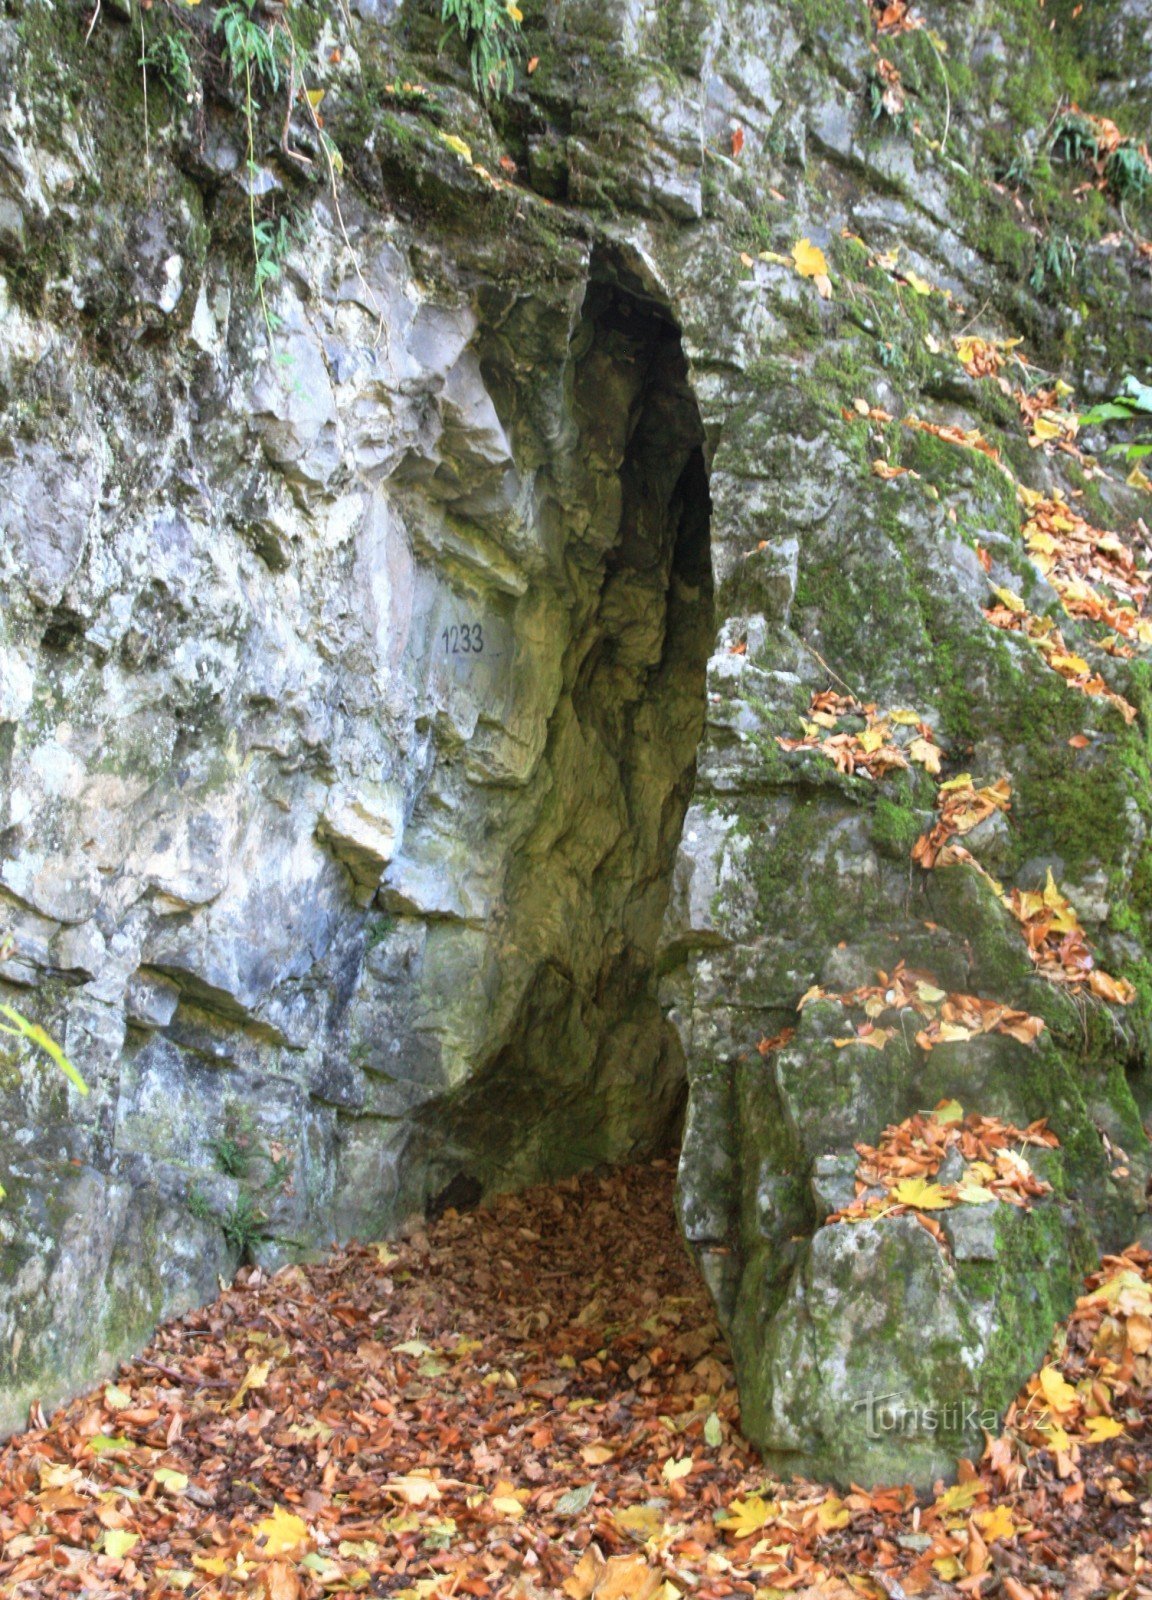 Eine der anderen Höhlen oberhalb von Švýcárna im Josefovské údolí